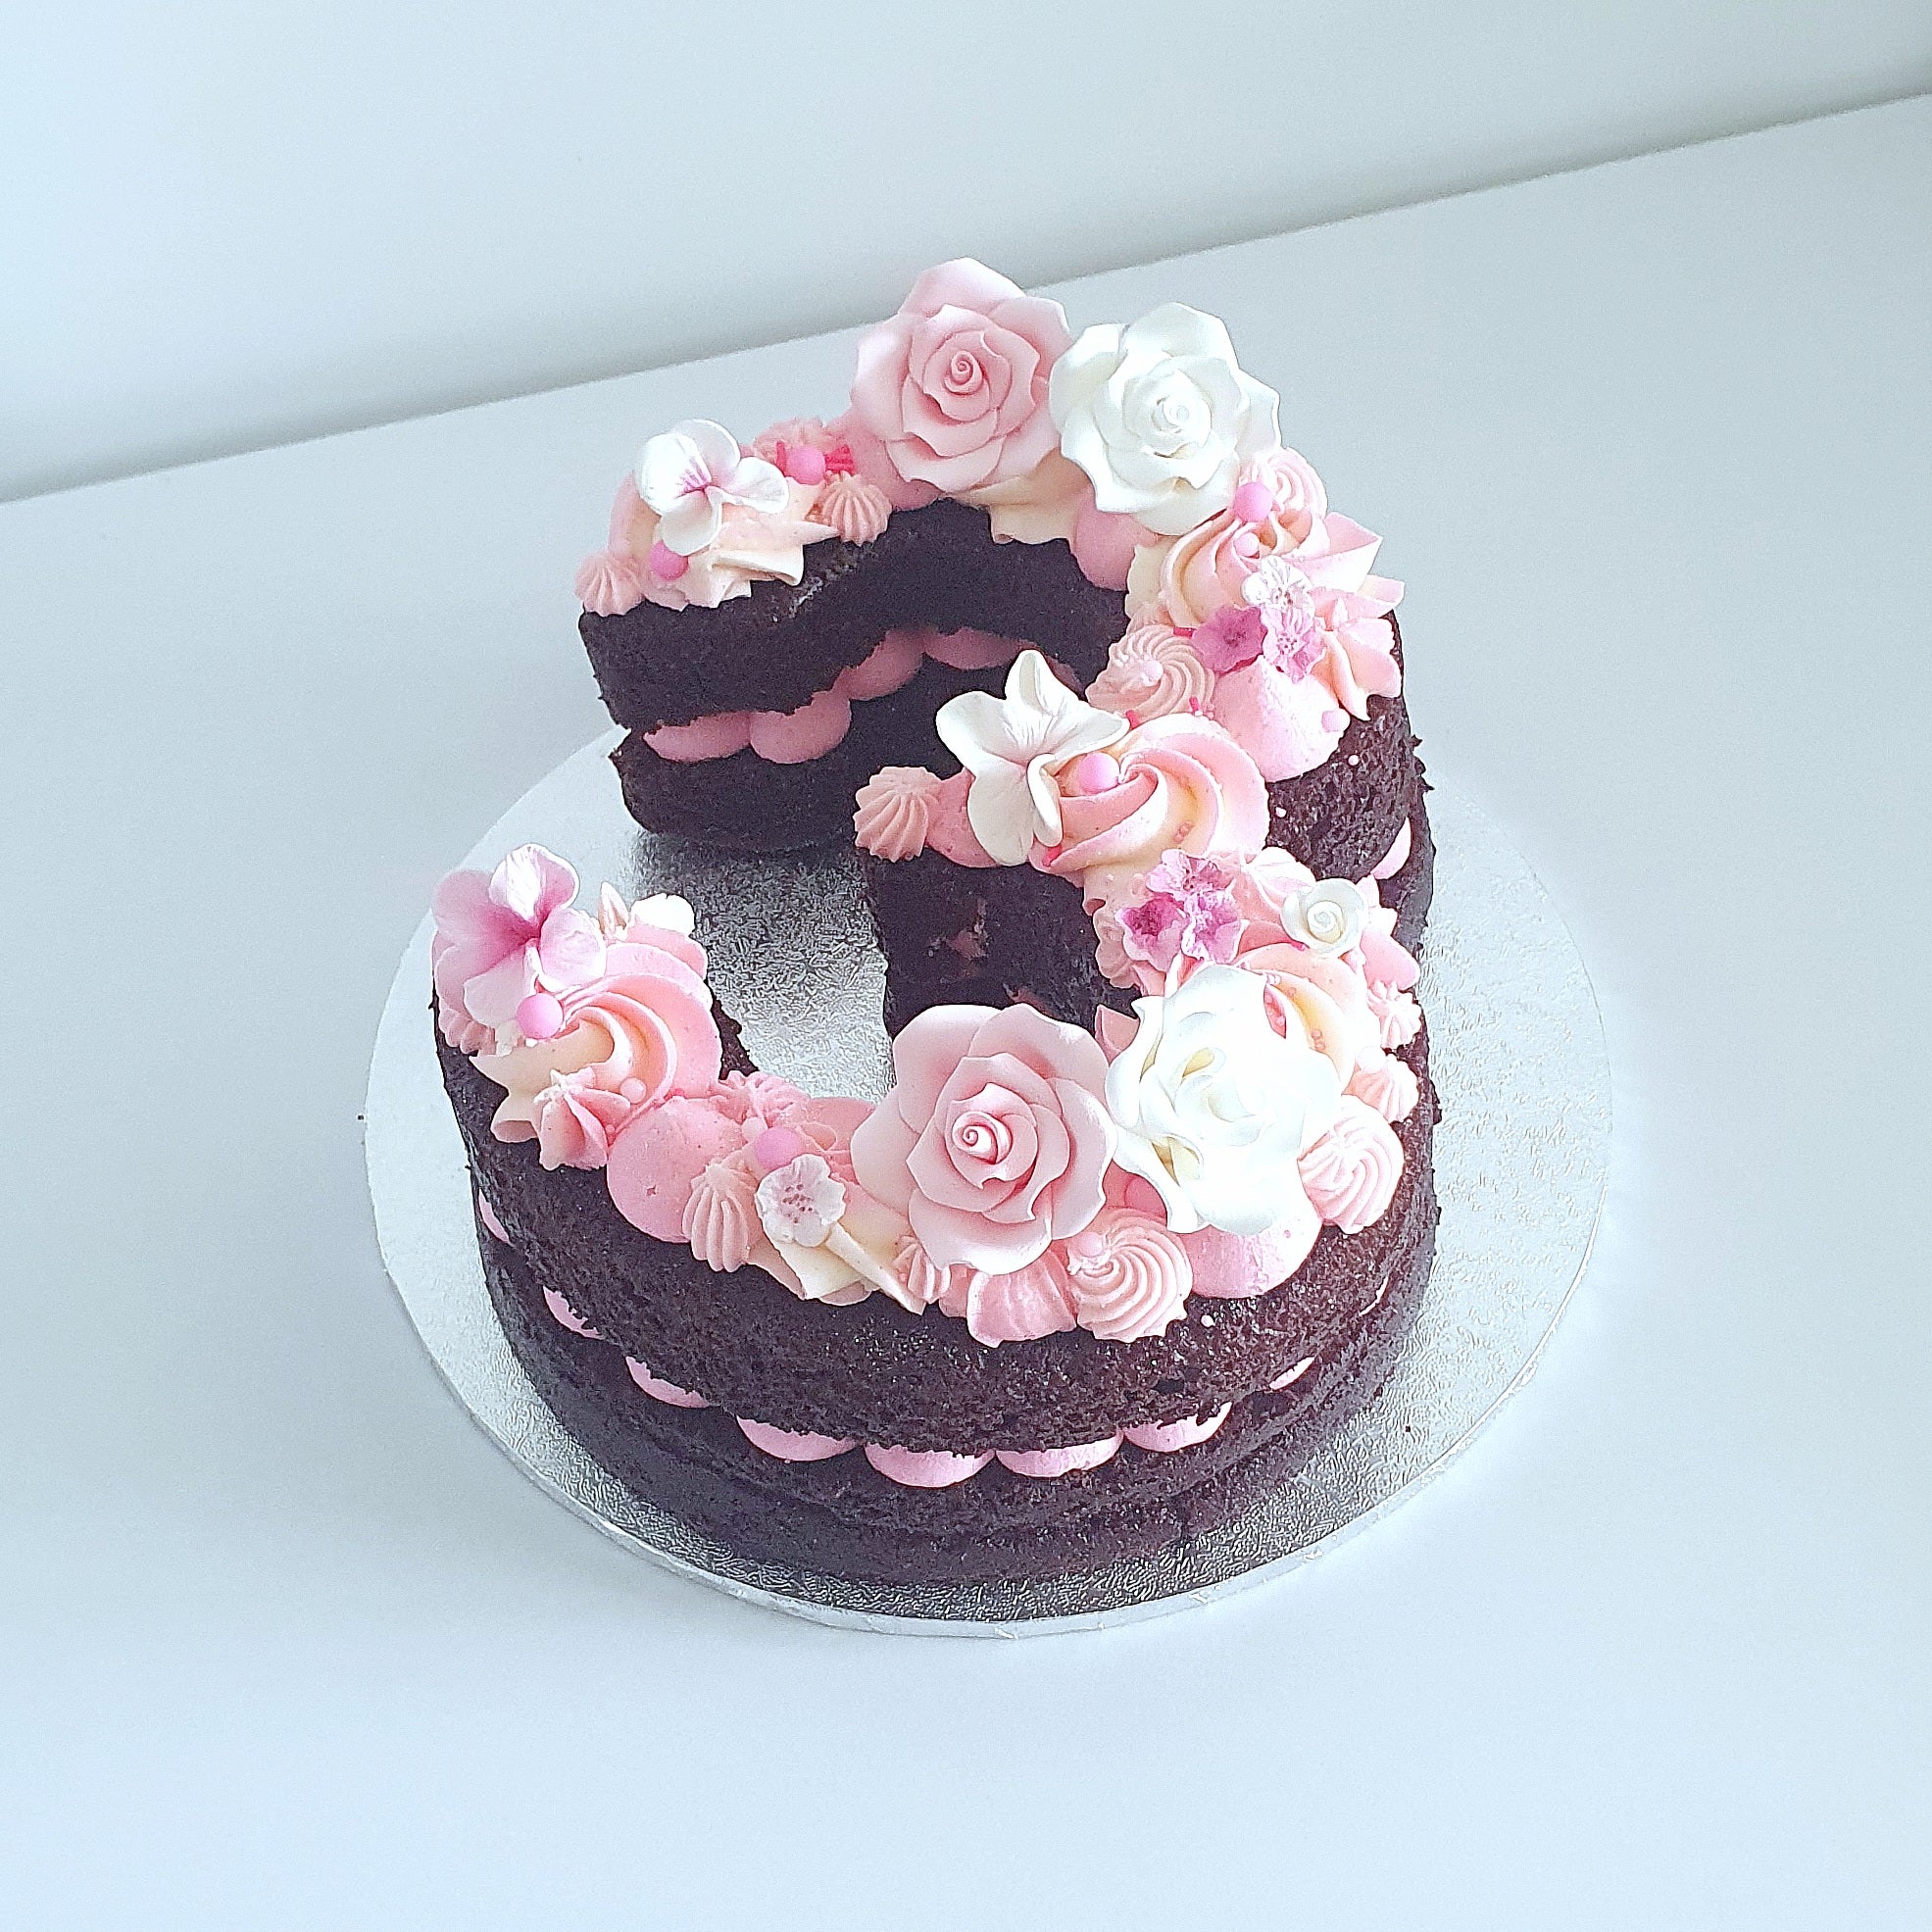 Number Cakes & Dessert Ideas For Single Digit Birthdays | Number cakes, Number  4 cake, Number birthday cakes